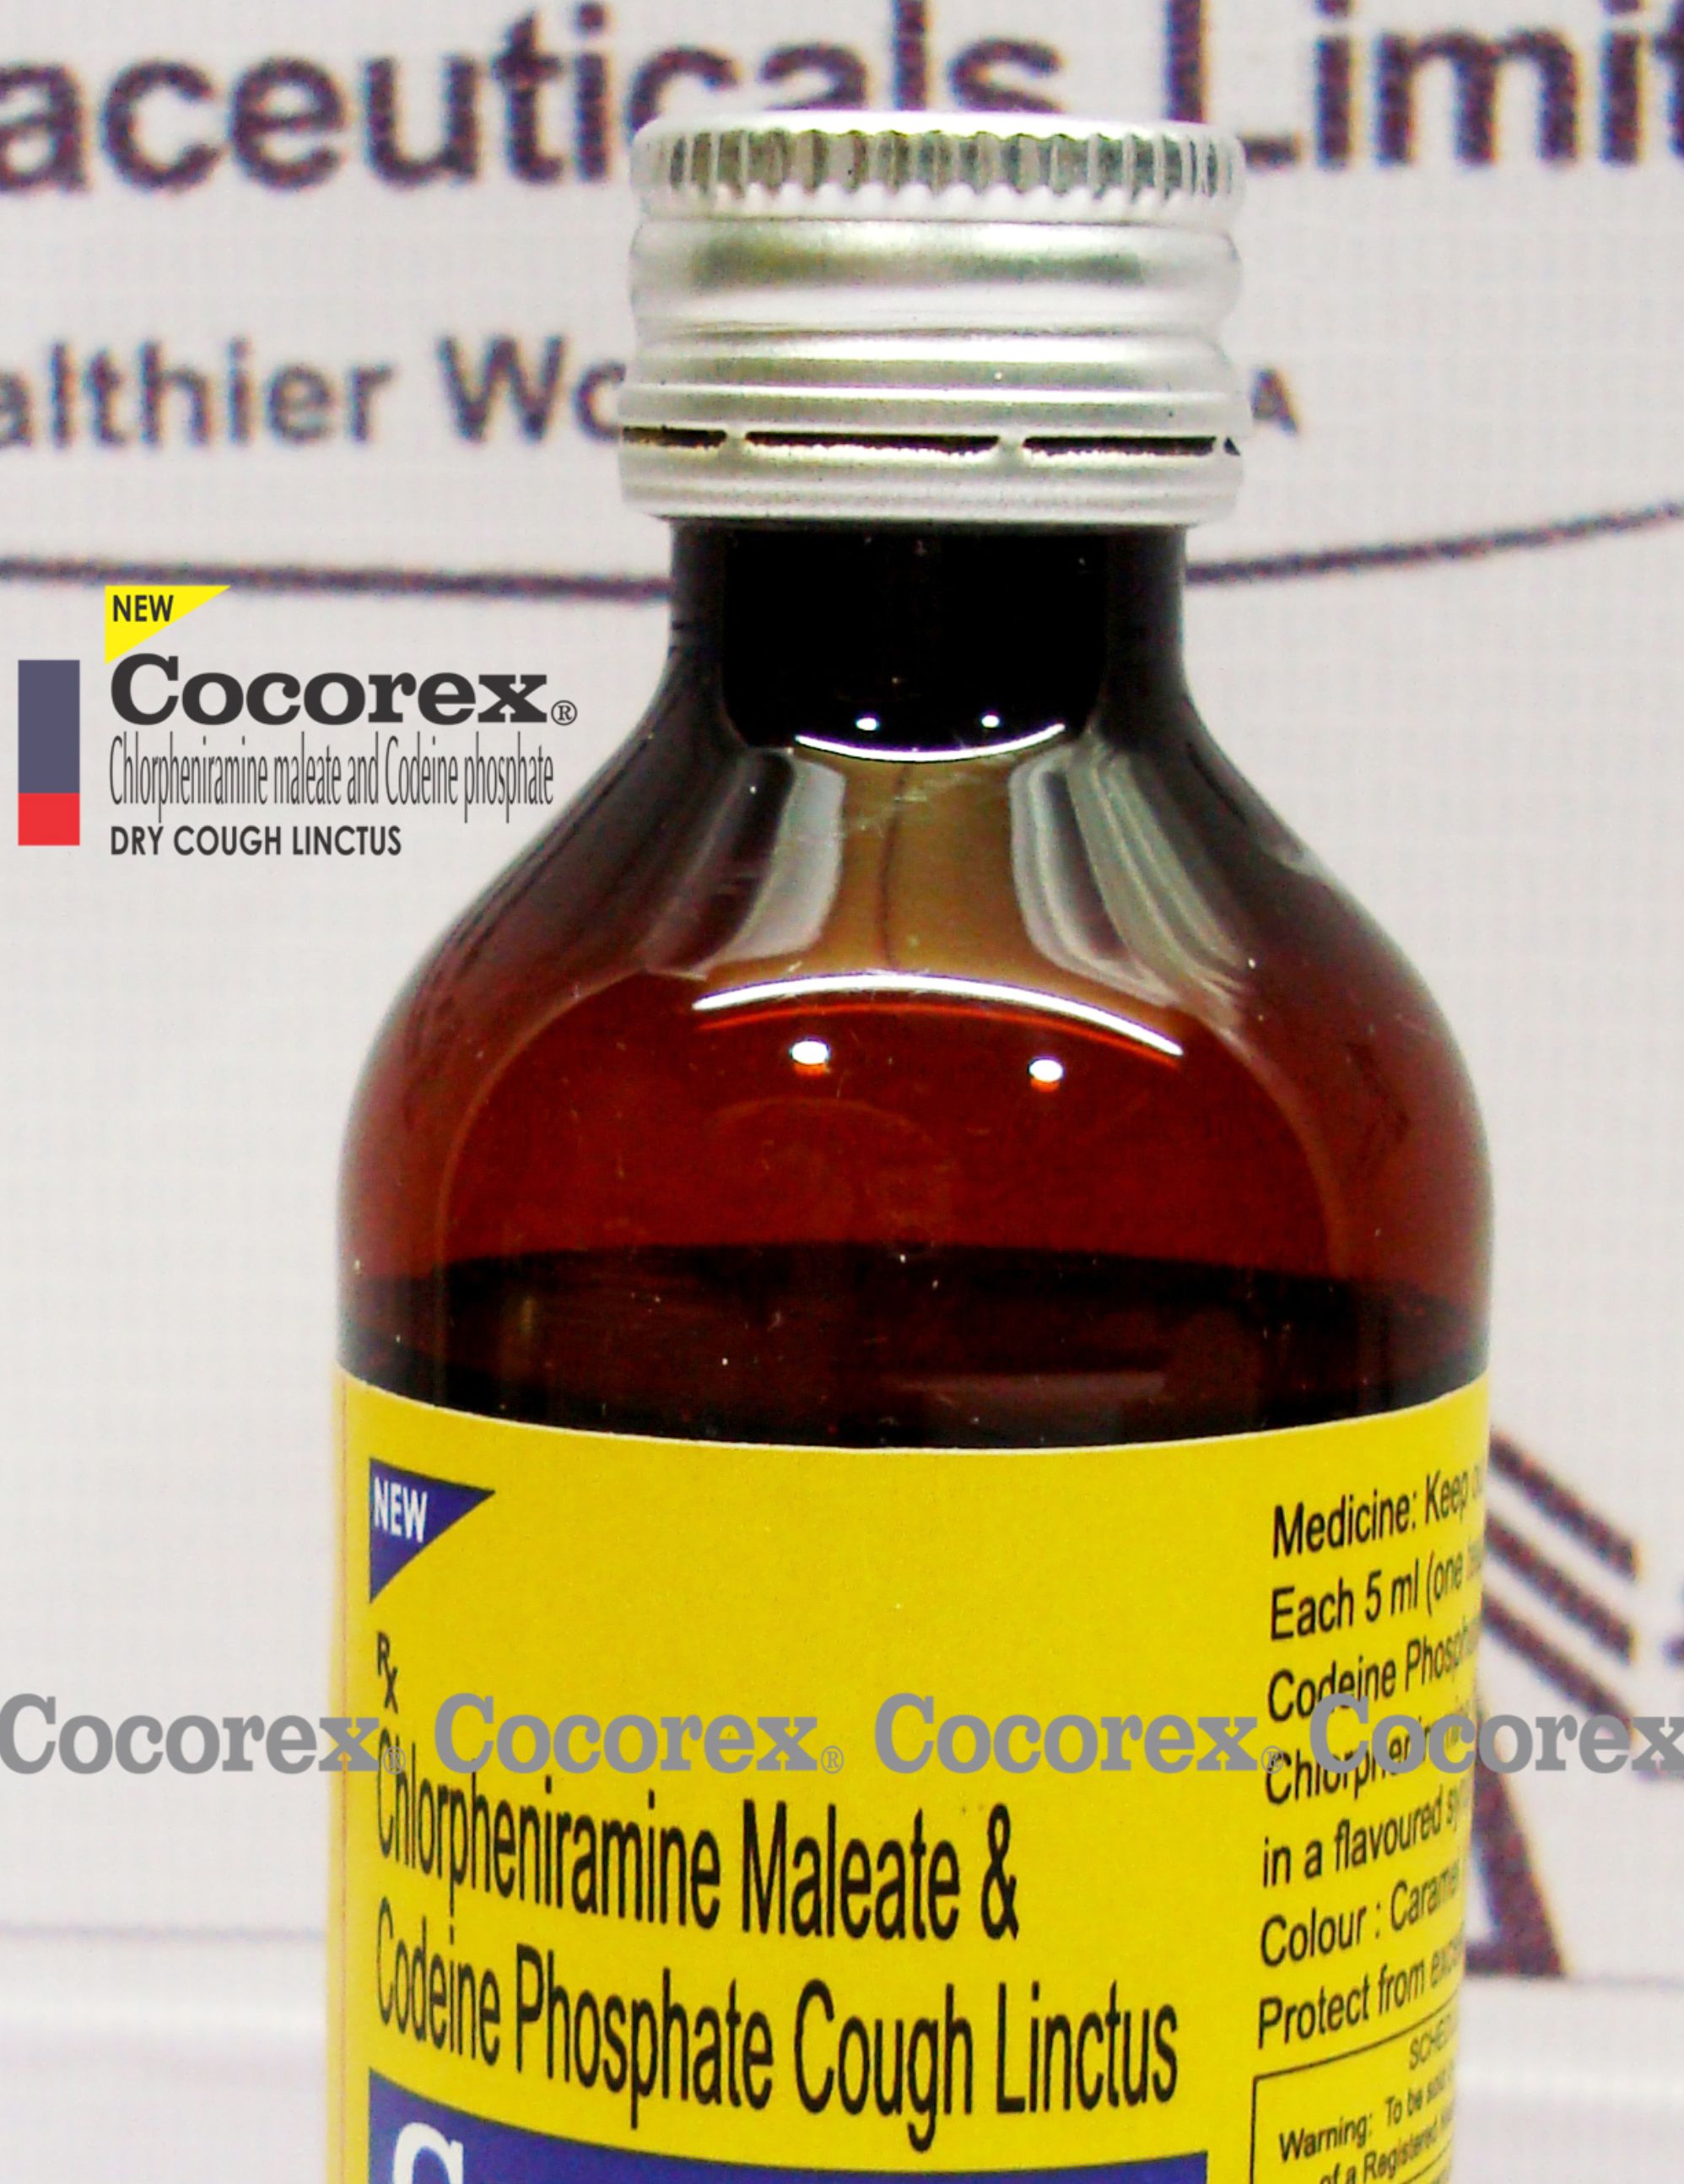 Cocorex Taj Pharma